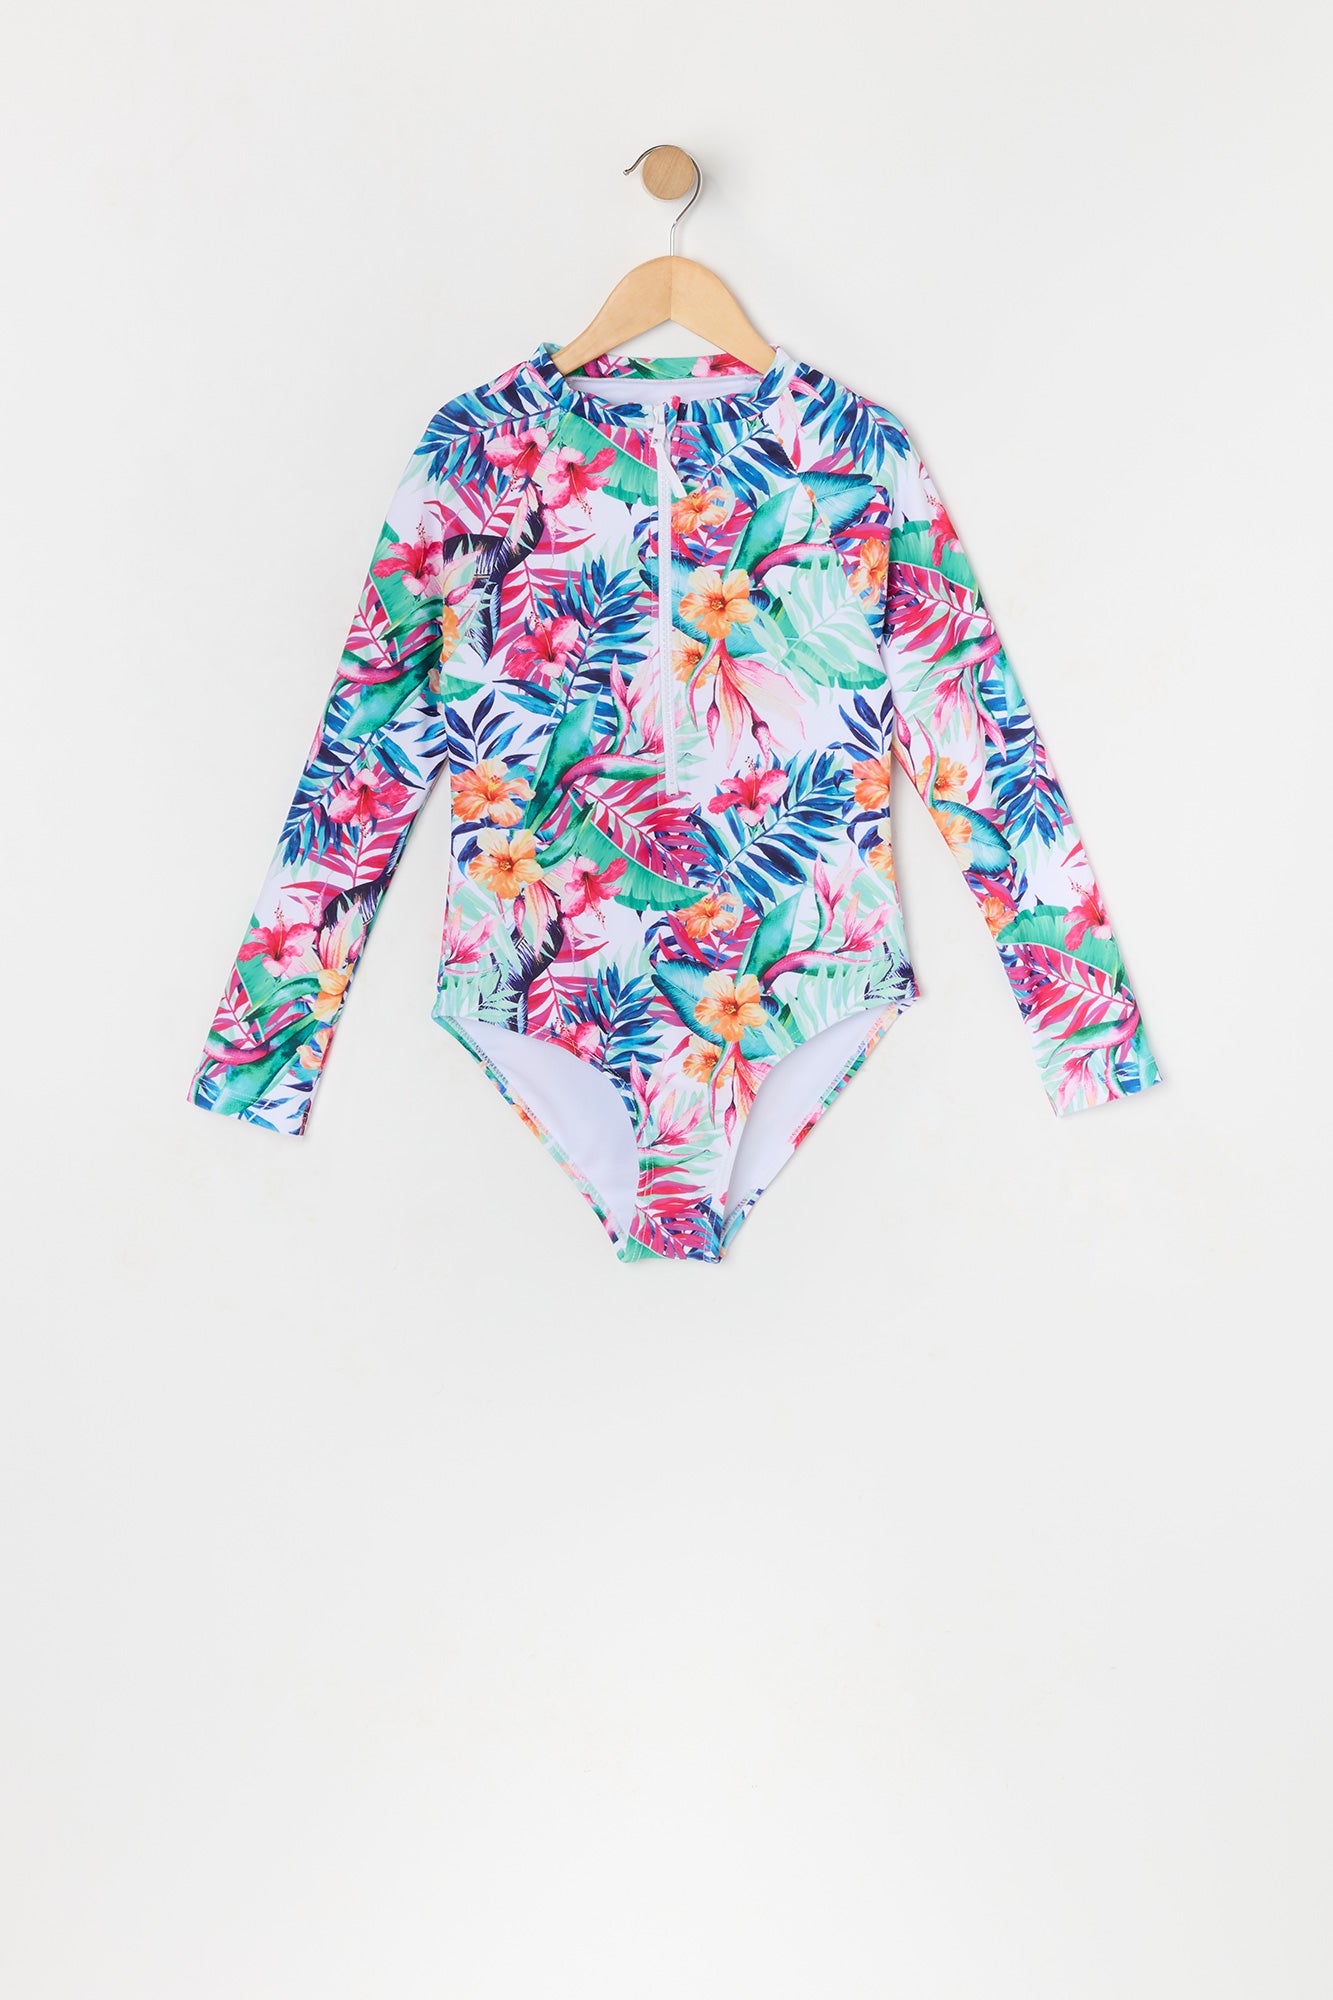 Girls Tropical Print One Piece Rashguard Swimsuit